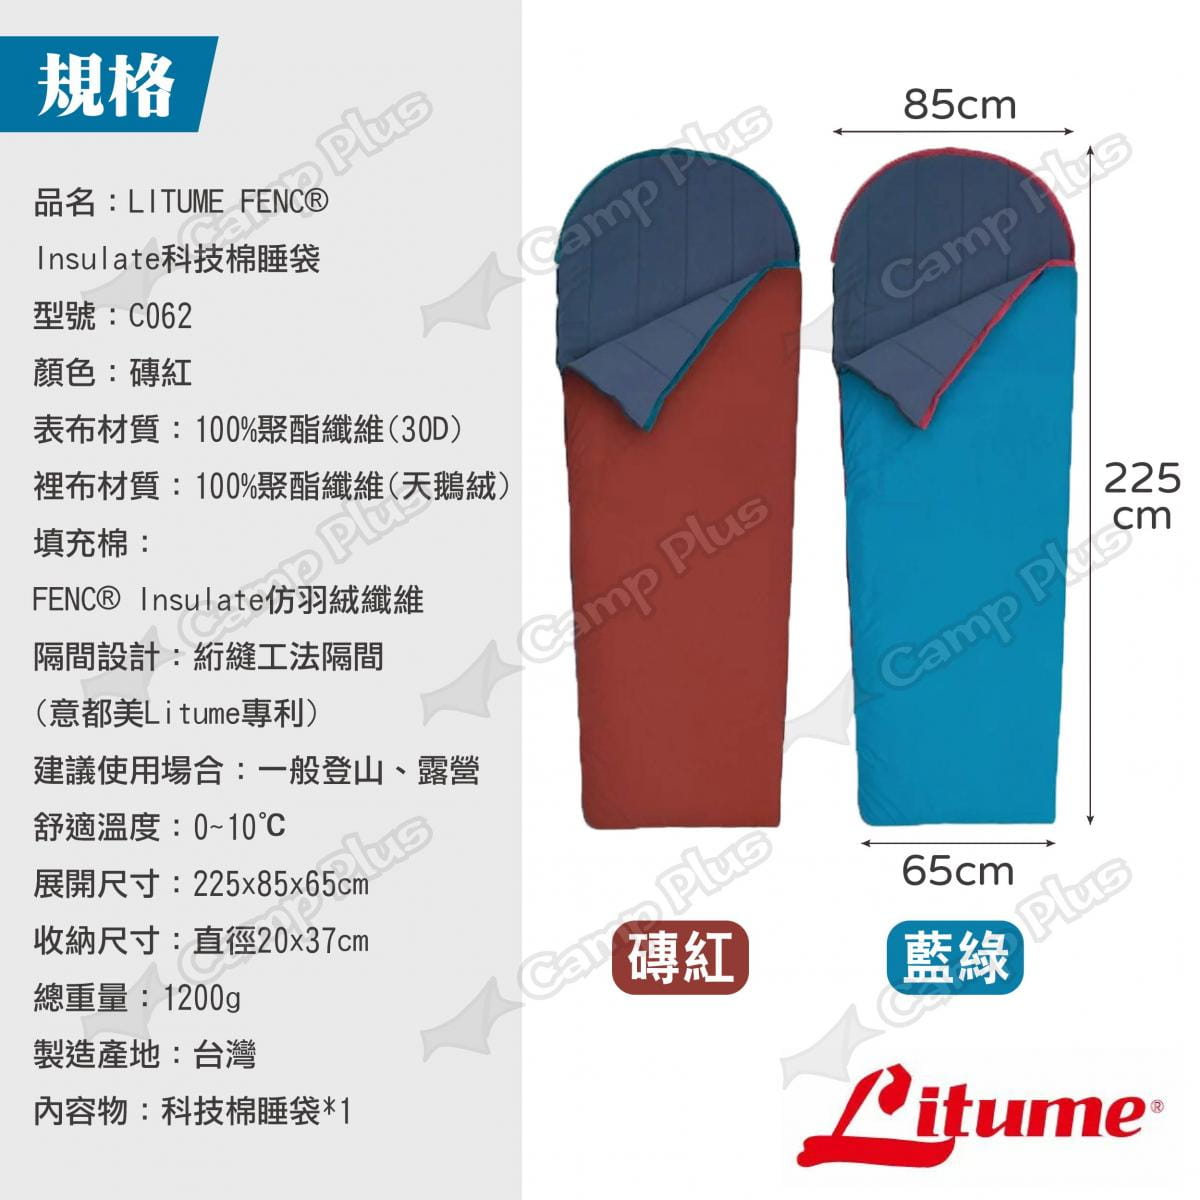 【LITUME】意都美 FENC® Insulate 科技棉睡袋 C062磚紅 悠遊戶外 9